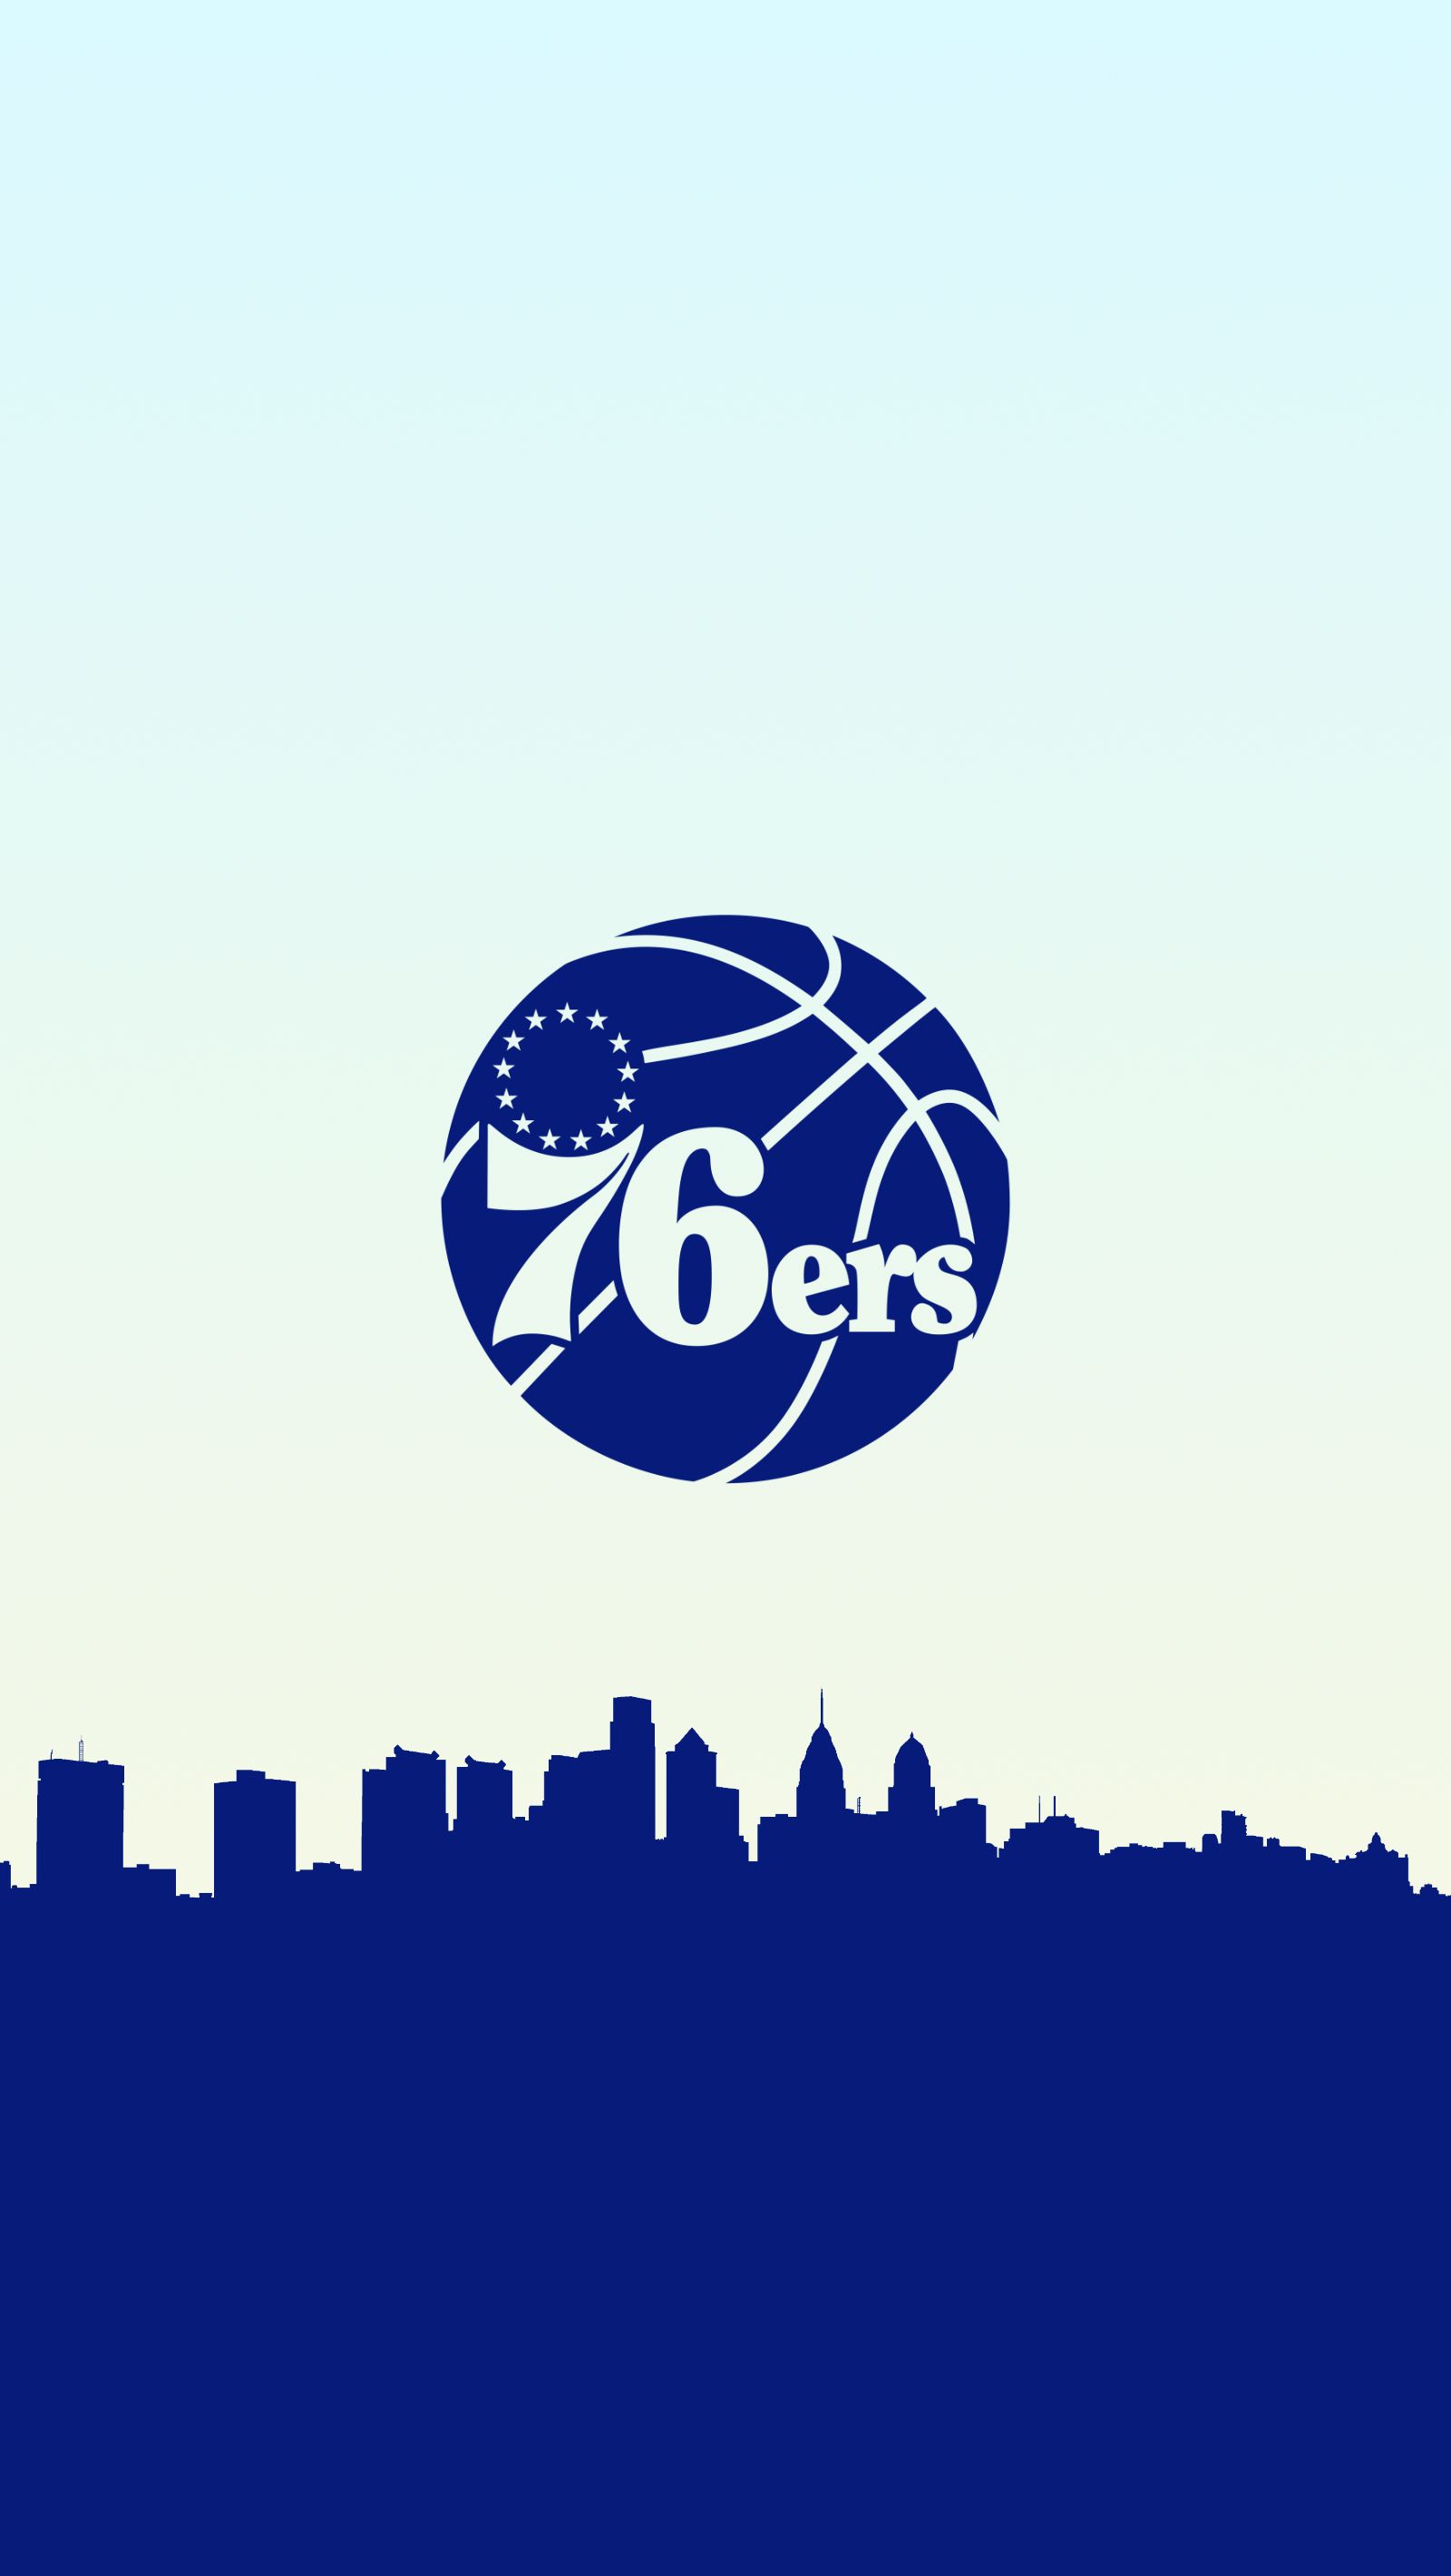 Philadelphia 76ers Basketball Phone Background. Basketball wallpaper, Cool basketball wallpaper, Basketball wallpaper hd